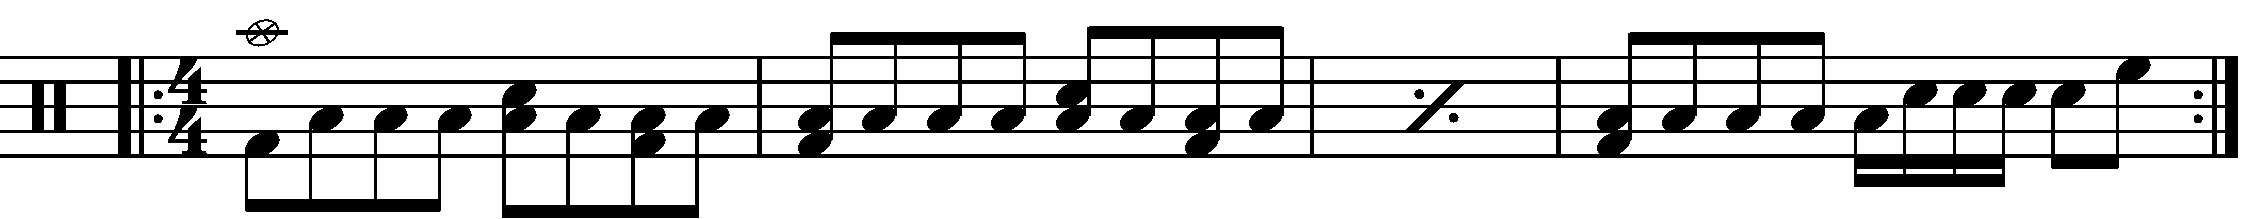 A four bar phrase using a half time groove.